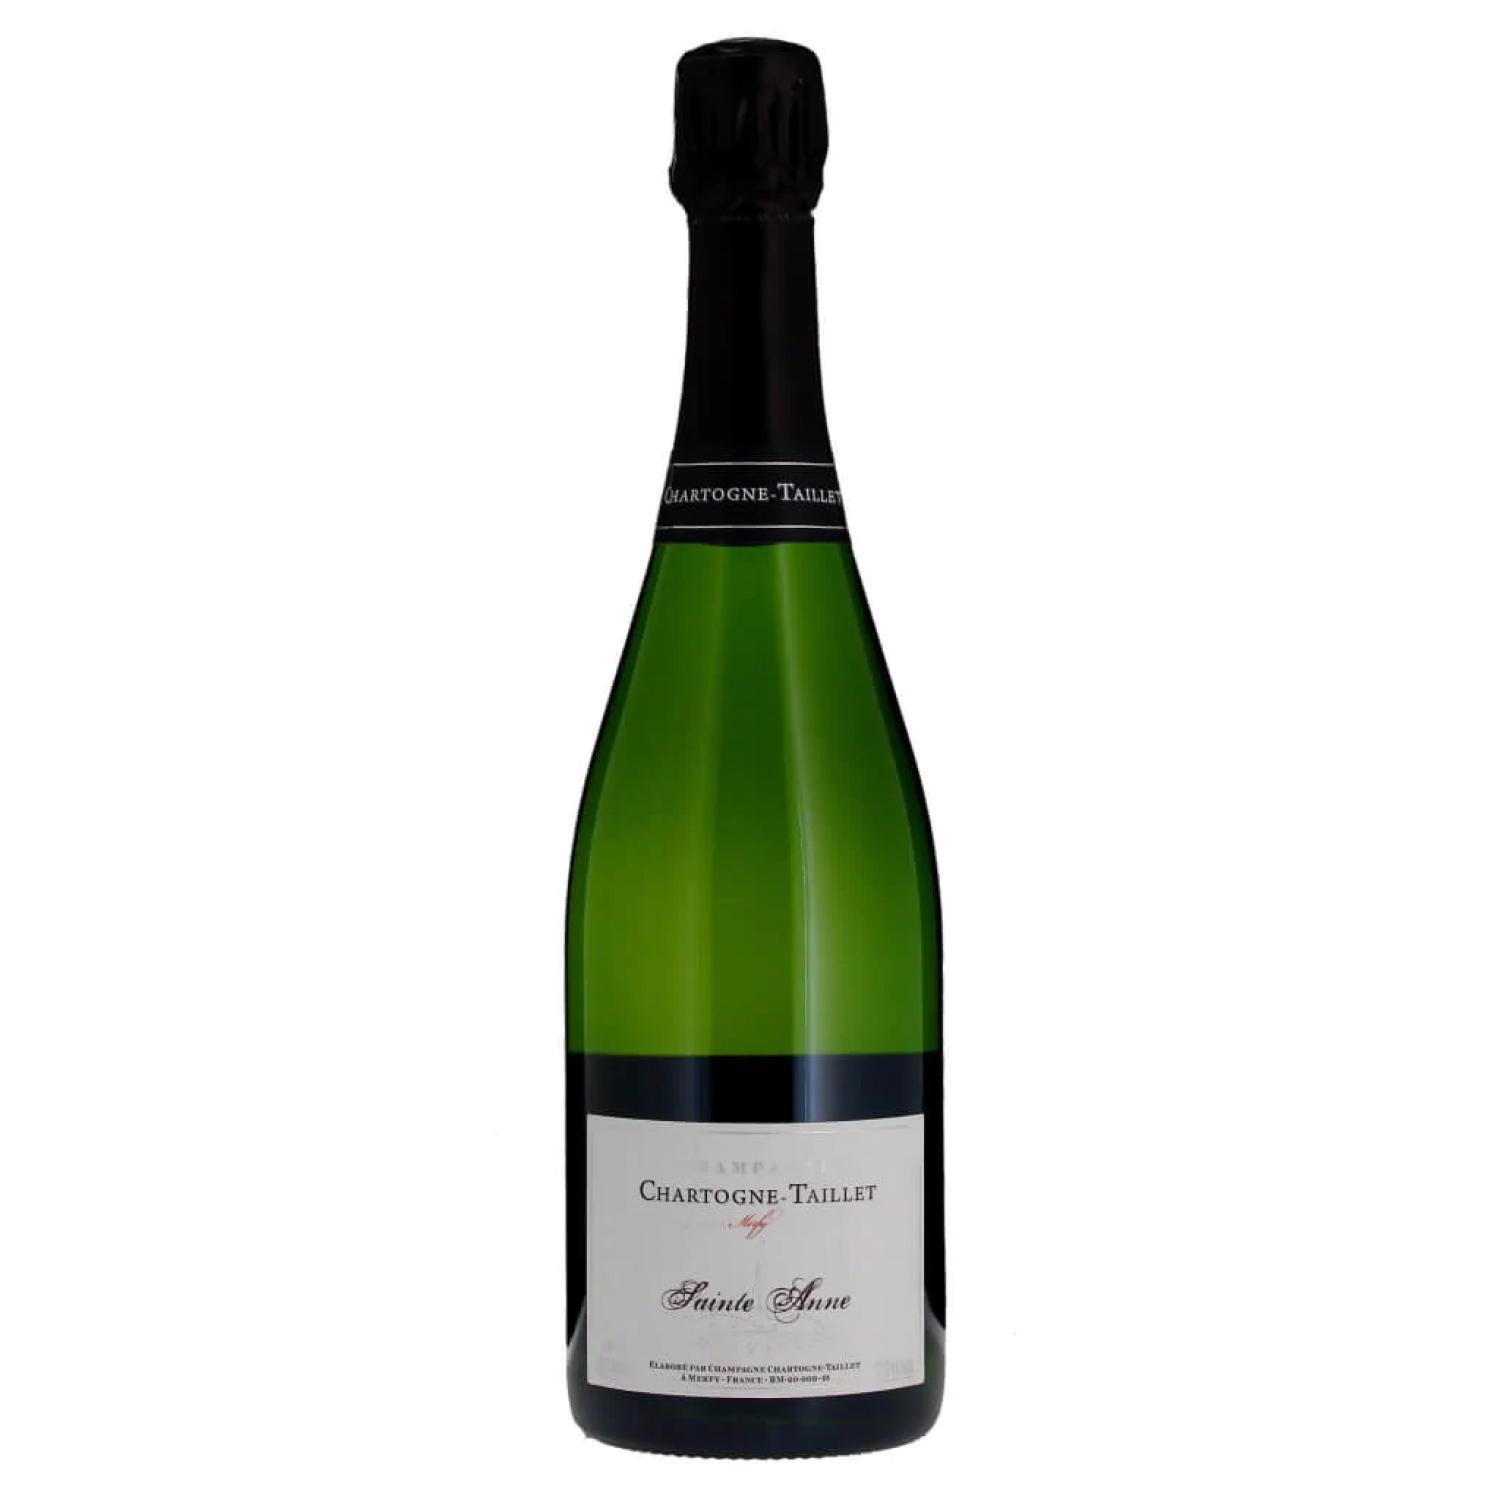 Chartogne-Taillet - Champagne Sainte Anne